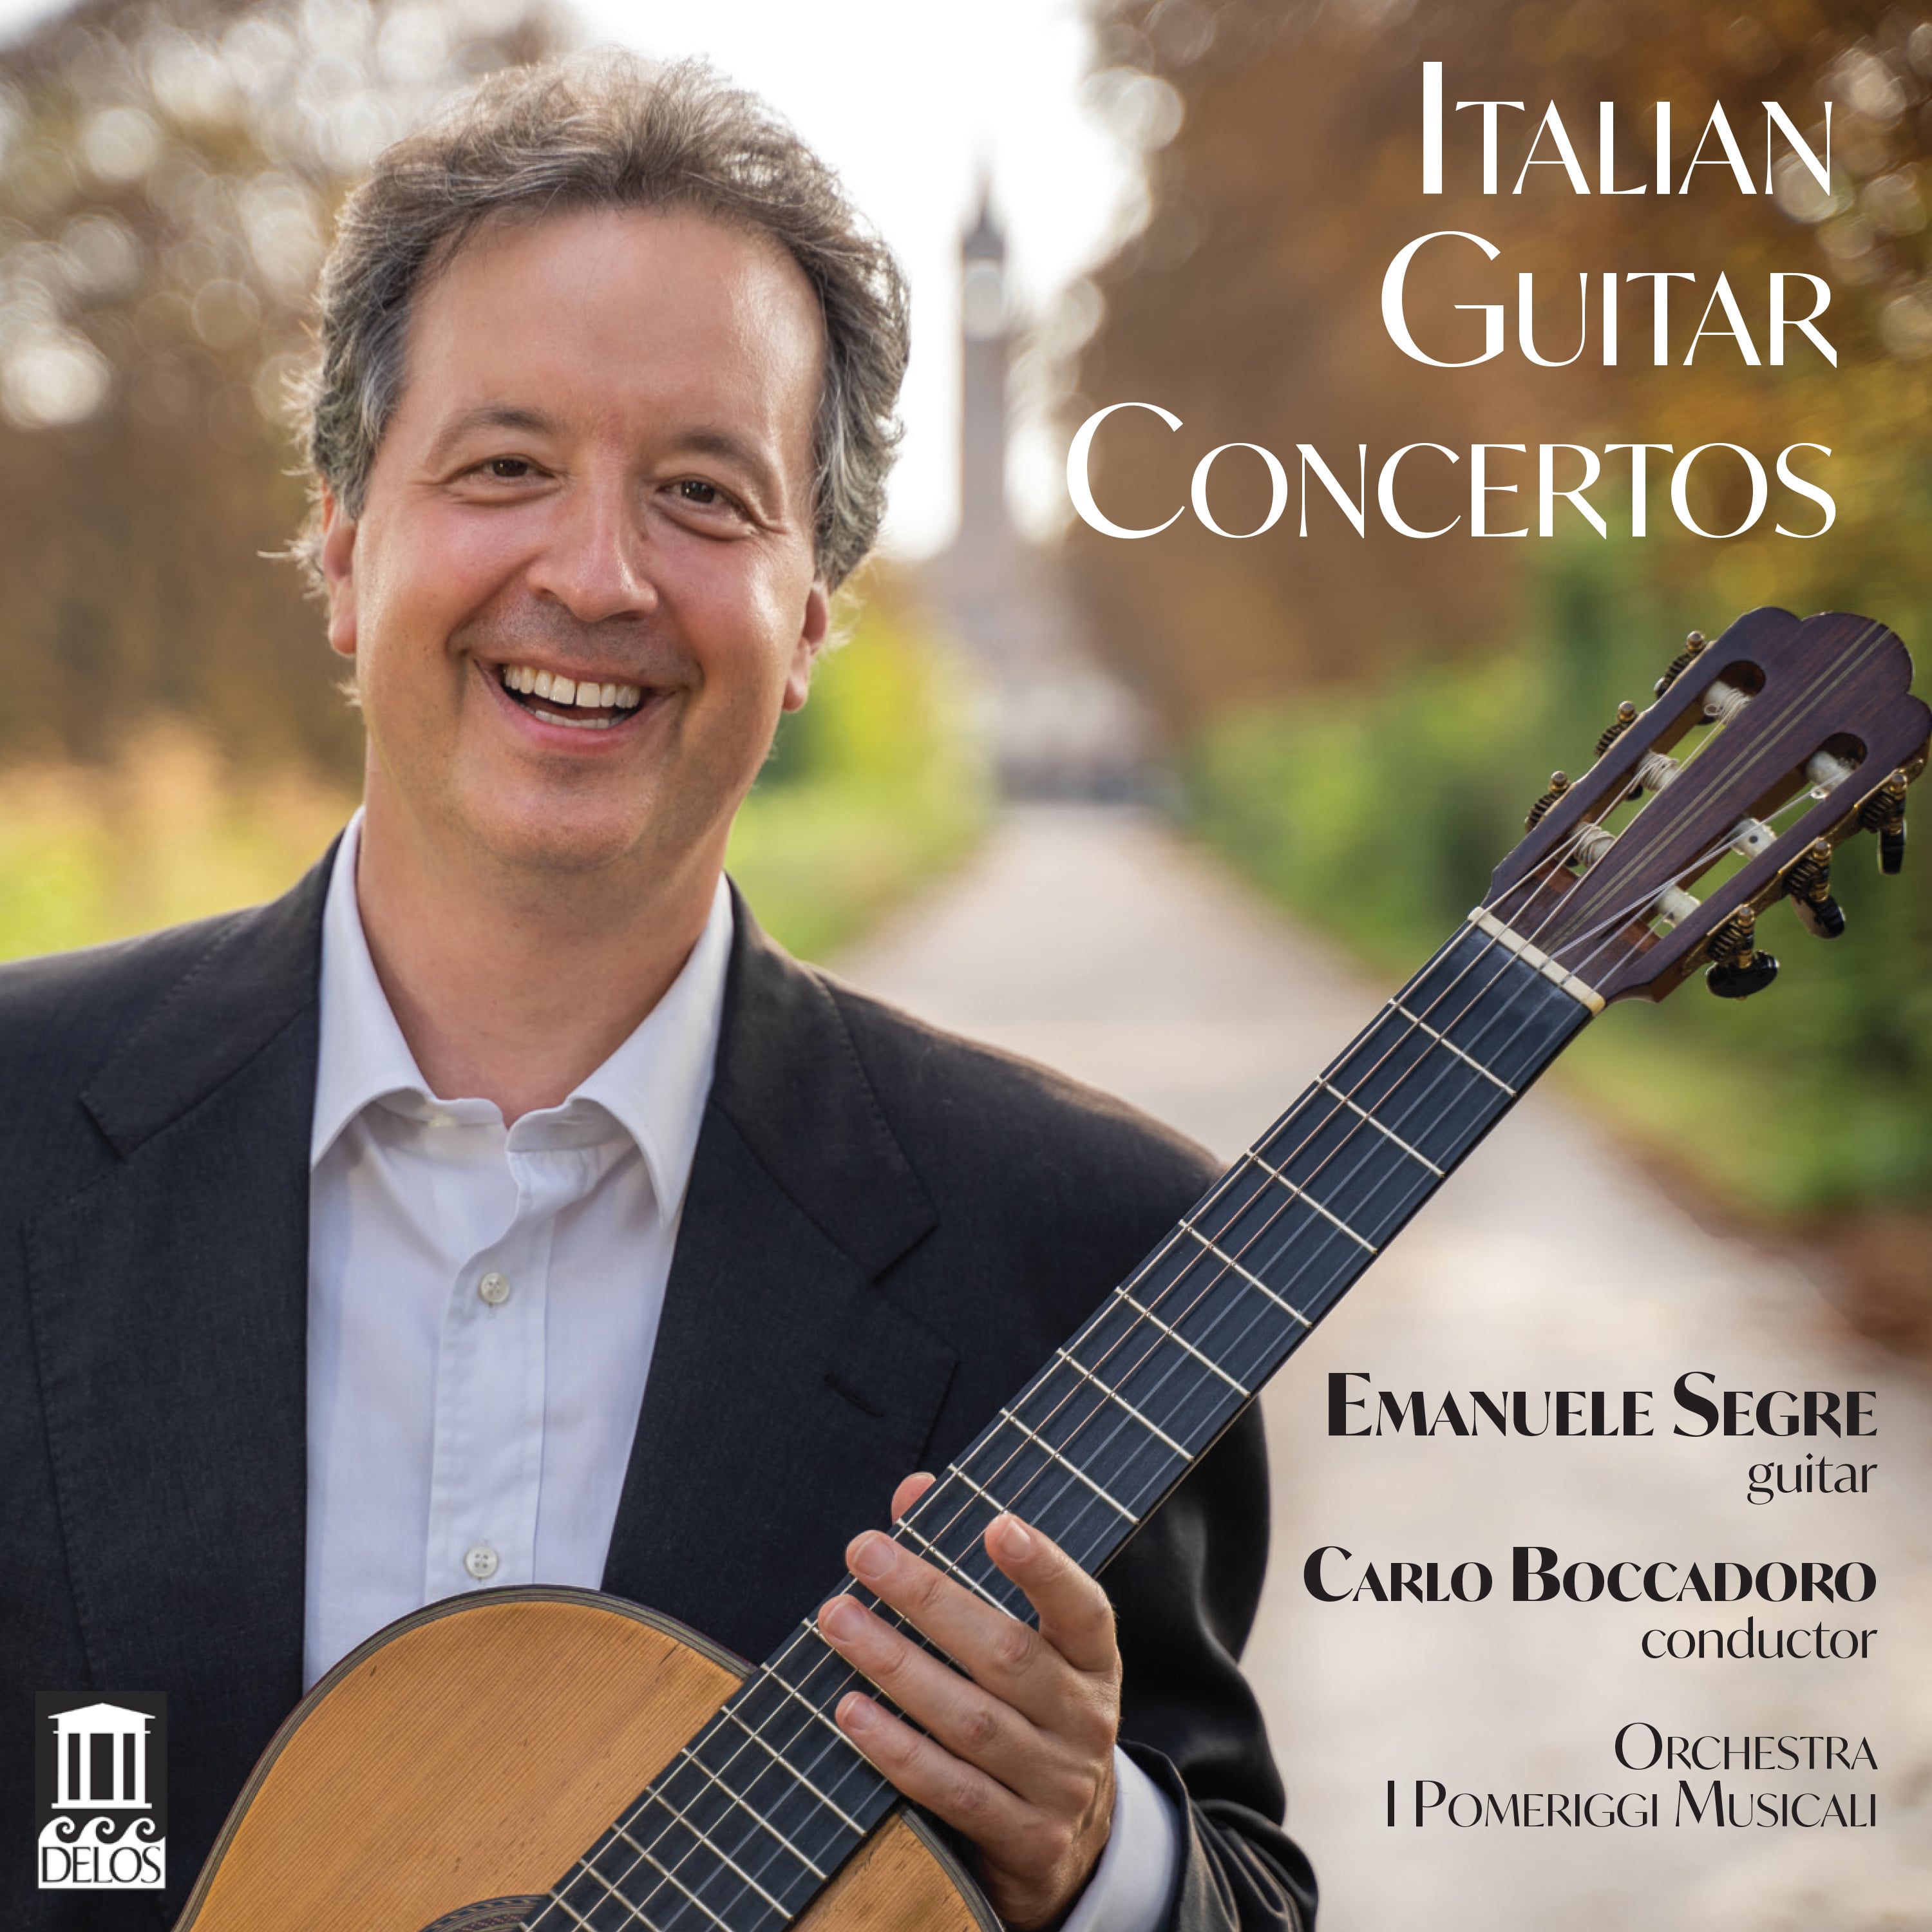 Emanuele Segre, Orchestra I Pomeriggi musicali & Carlo Boccadoro – Italian Guitar Concertos (2020) [FLAC 24bit/88,2kHz]